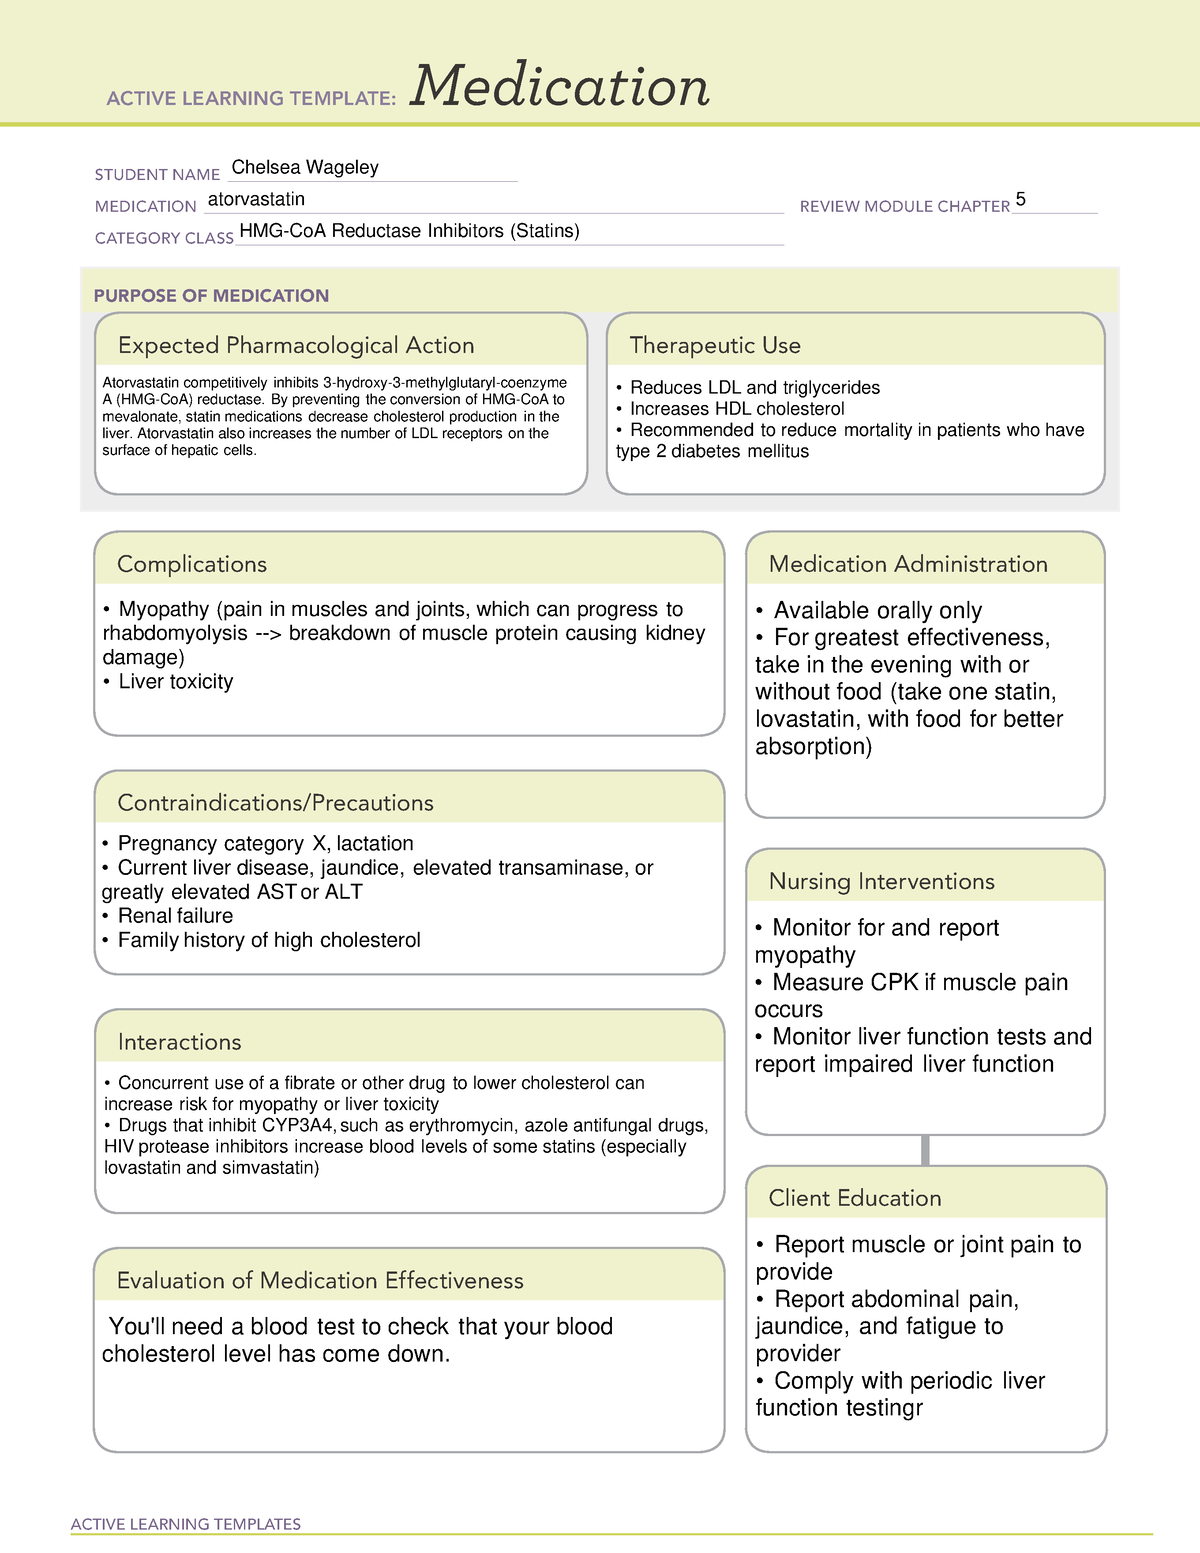 atorvastatin-ati-templates-active-learning-templates-medication